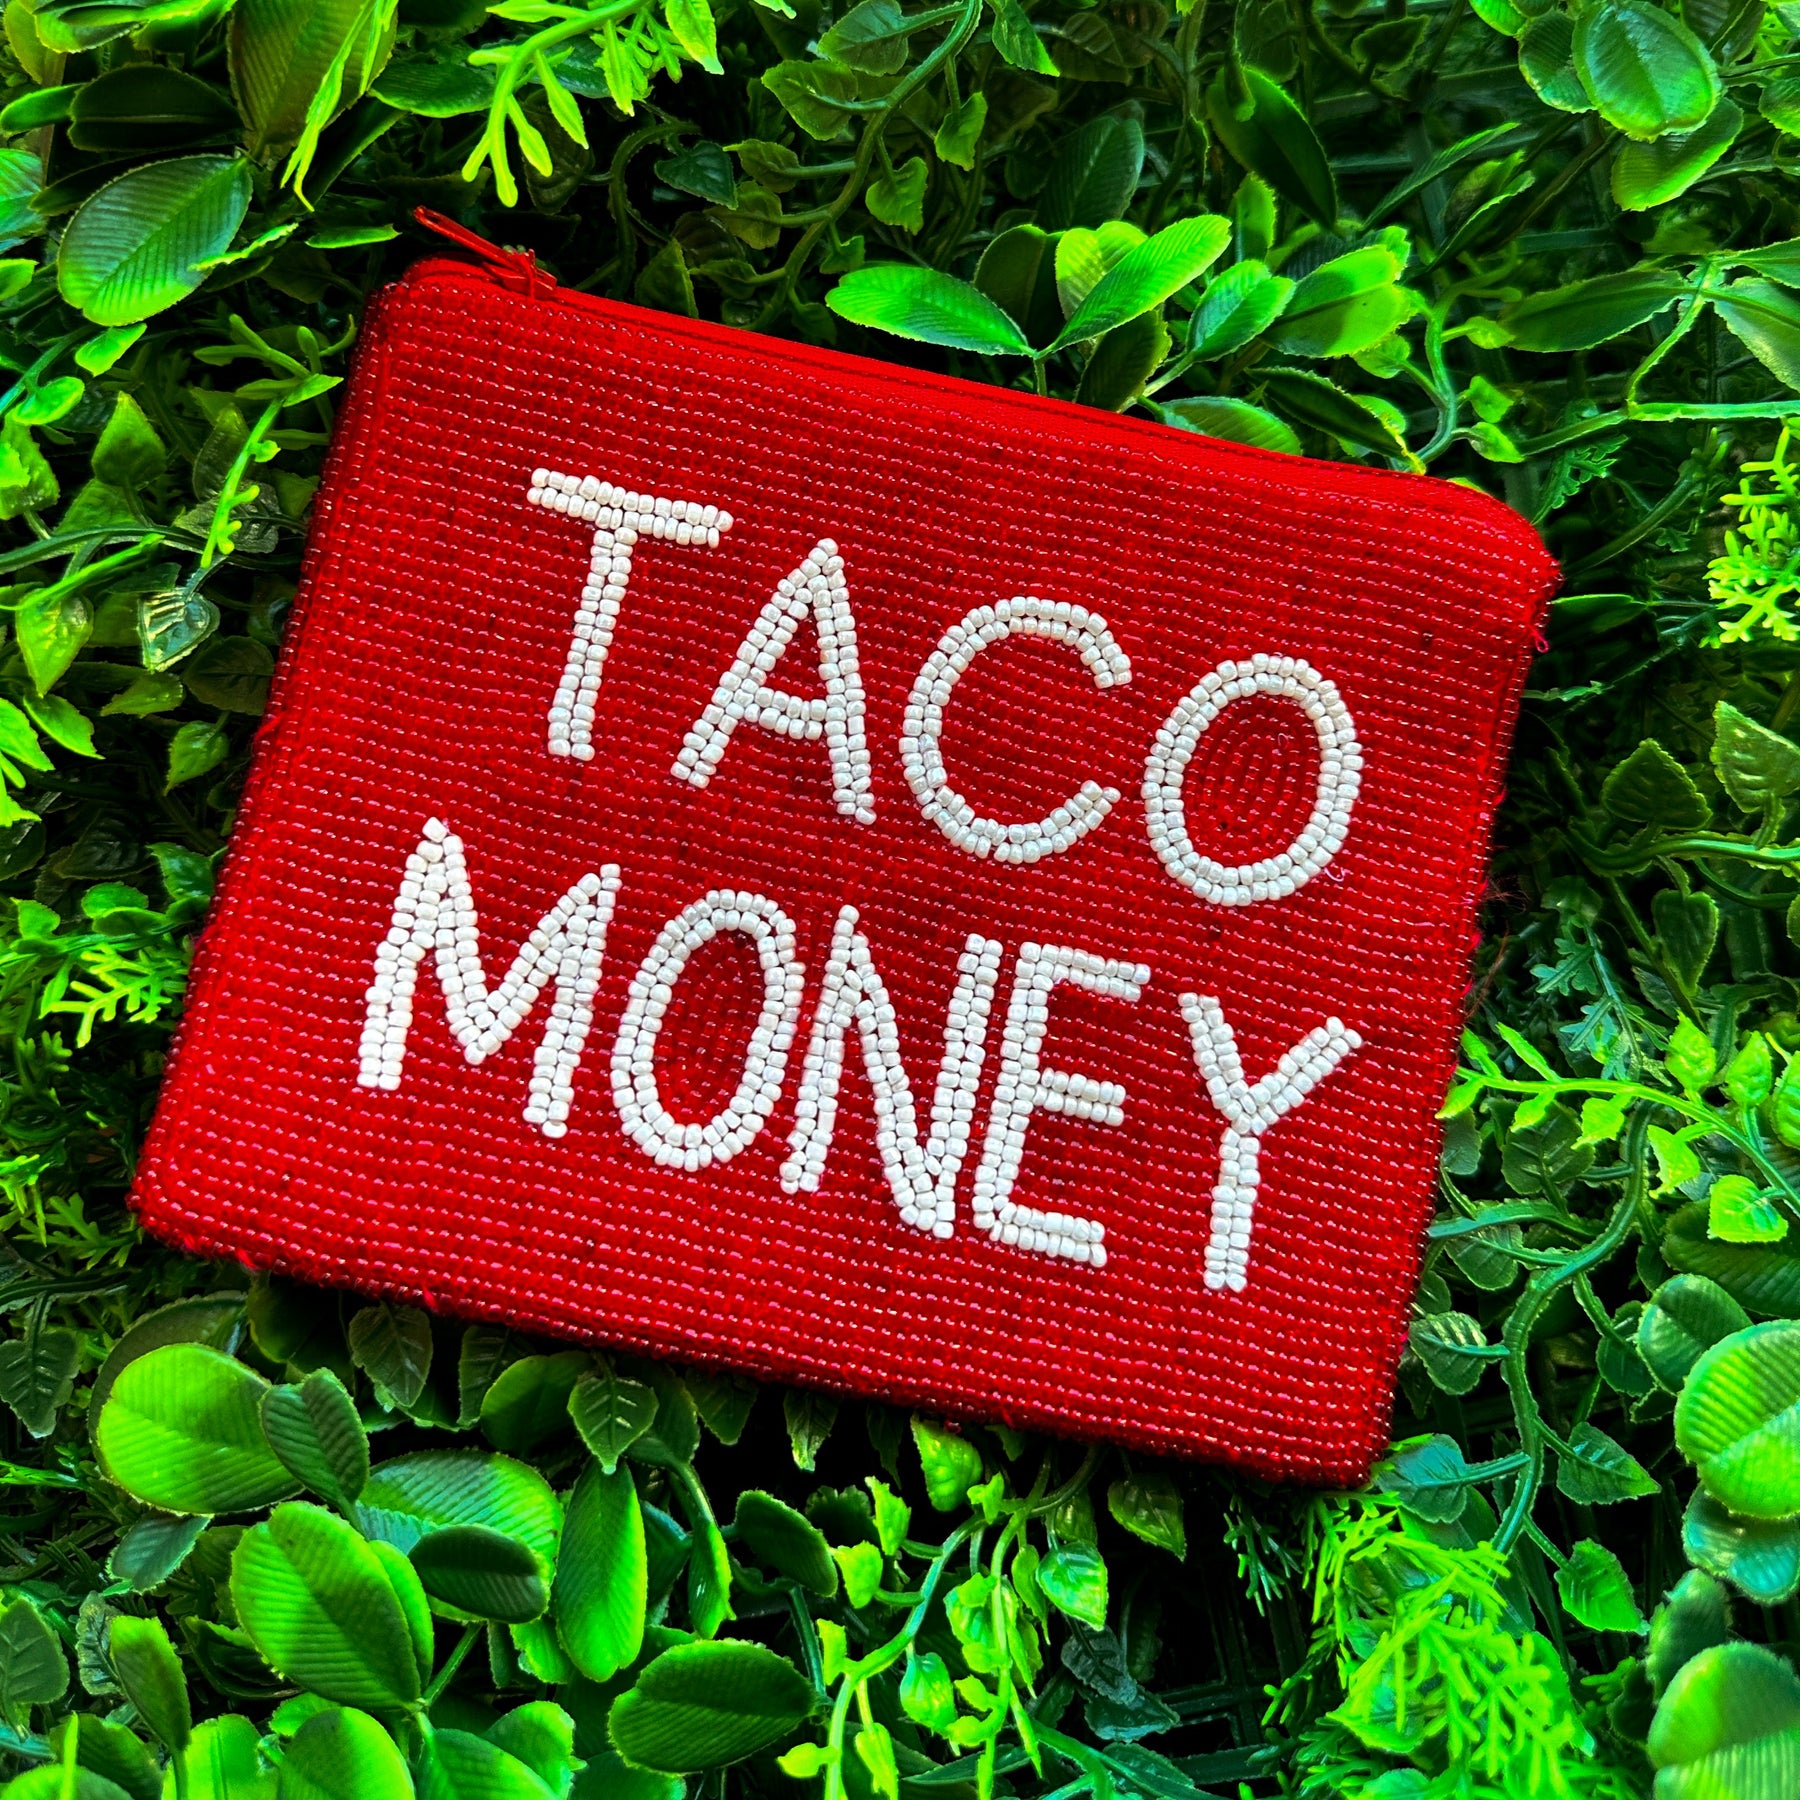 Taco Money Money Pouch